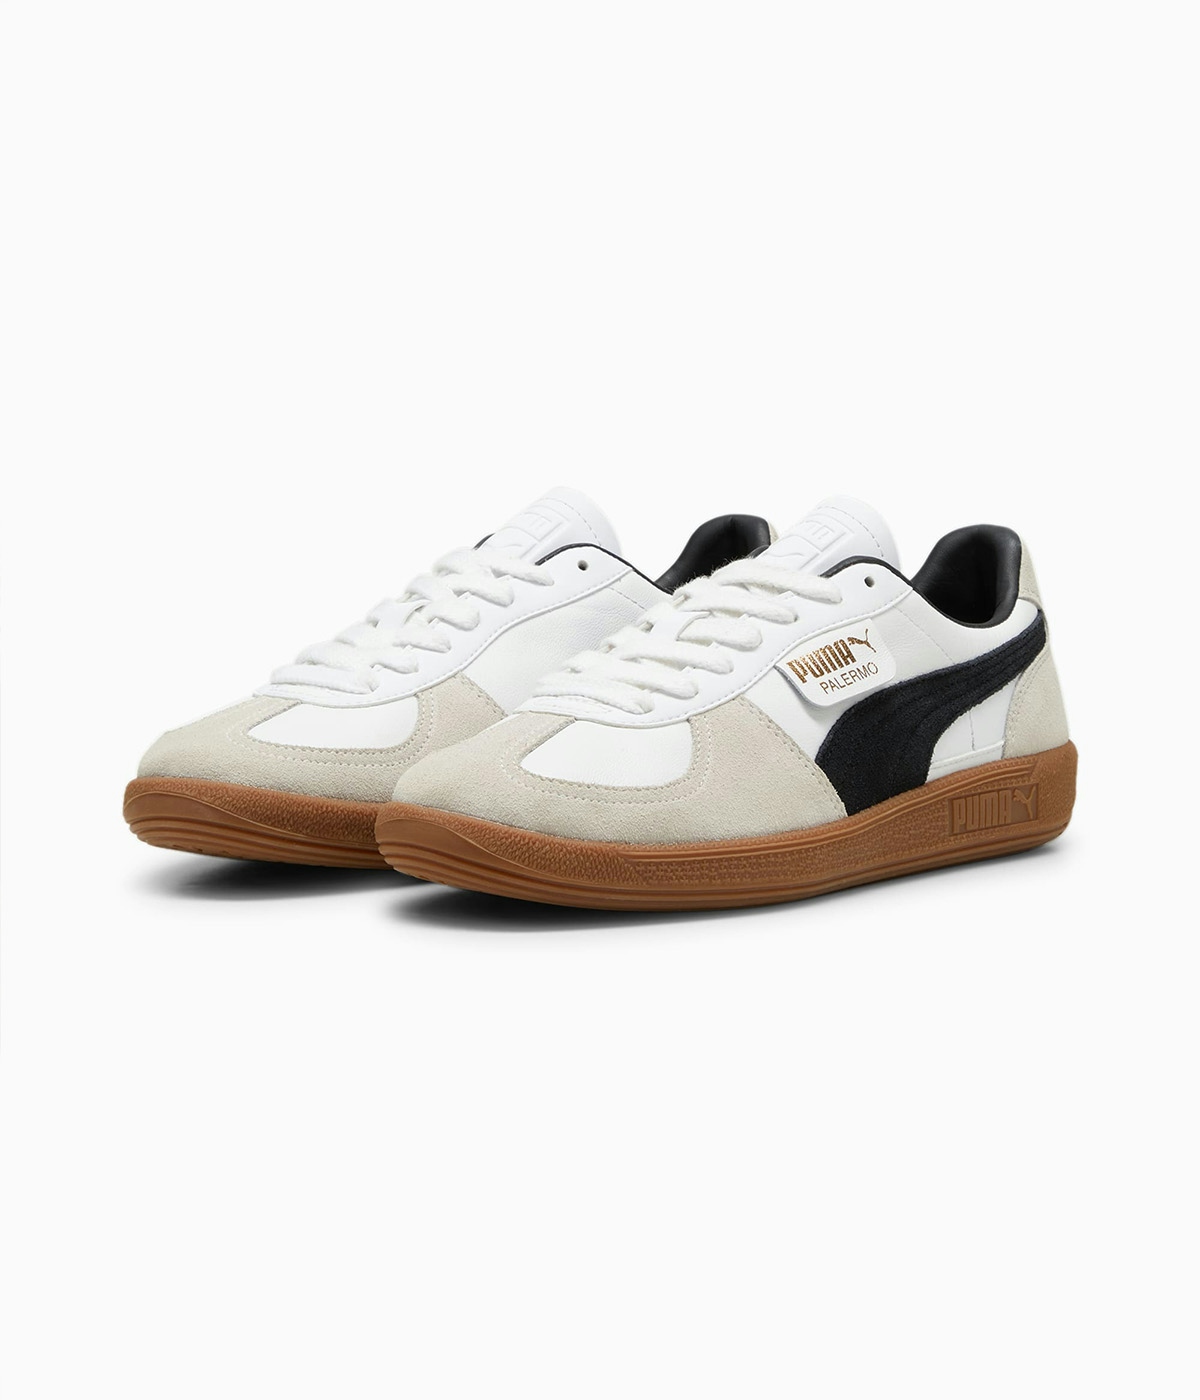 Puma Shoes Palermo Leather White